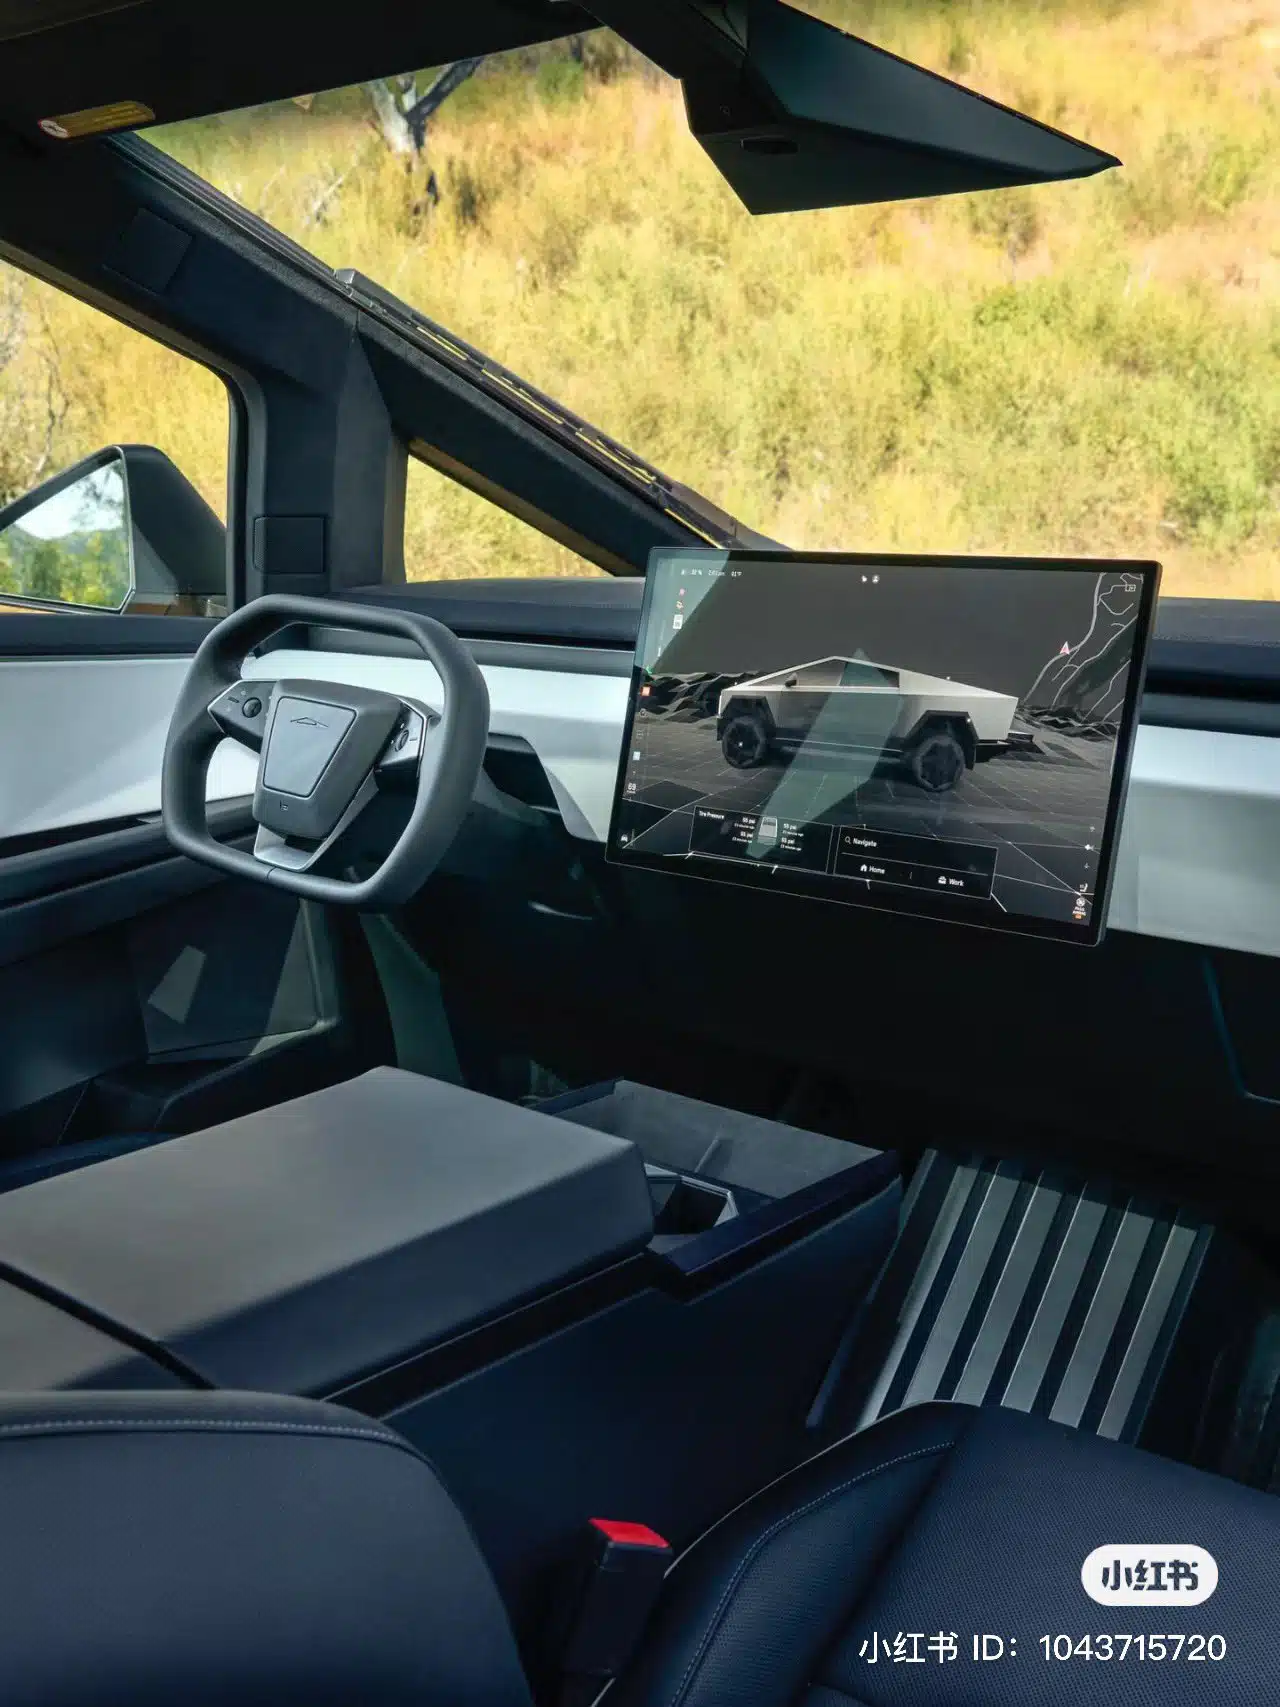 Leaked photos of Tesla Cybertruck interior appear online